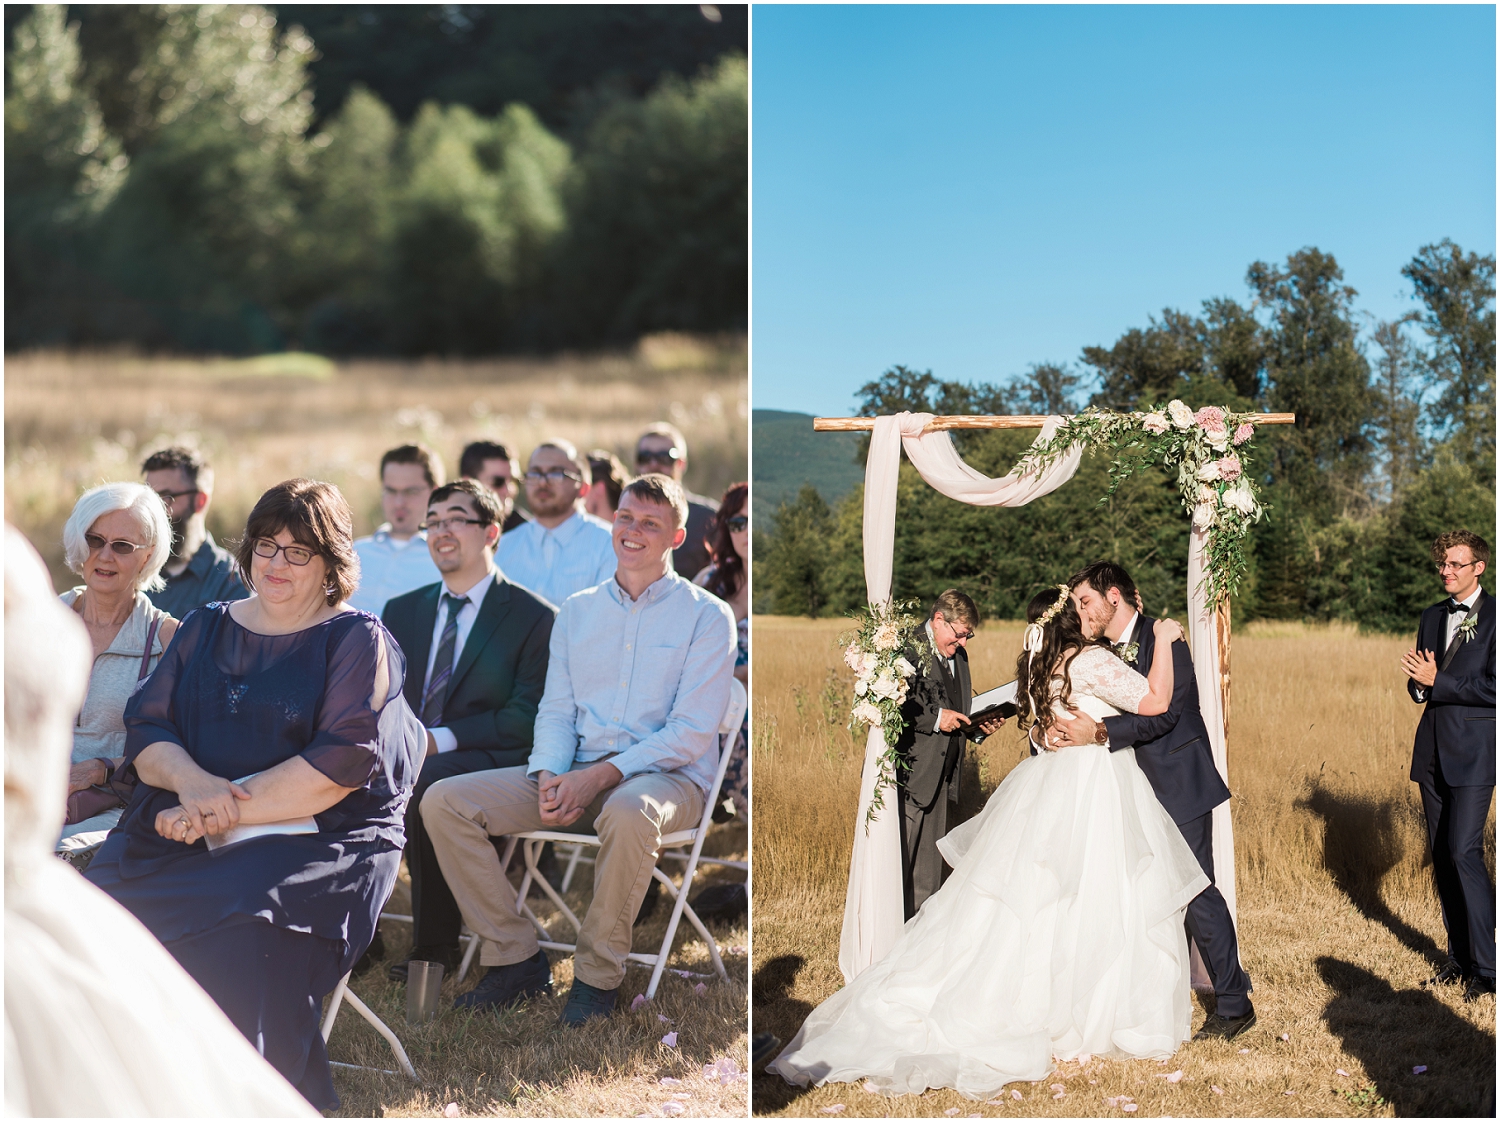  Mt. Baker Wedding, Whatcom County Wedding Photographer, Summer Bride, Geek Chic, Urbanista, Anthropologie, Magic the Gathering, On Trend 